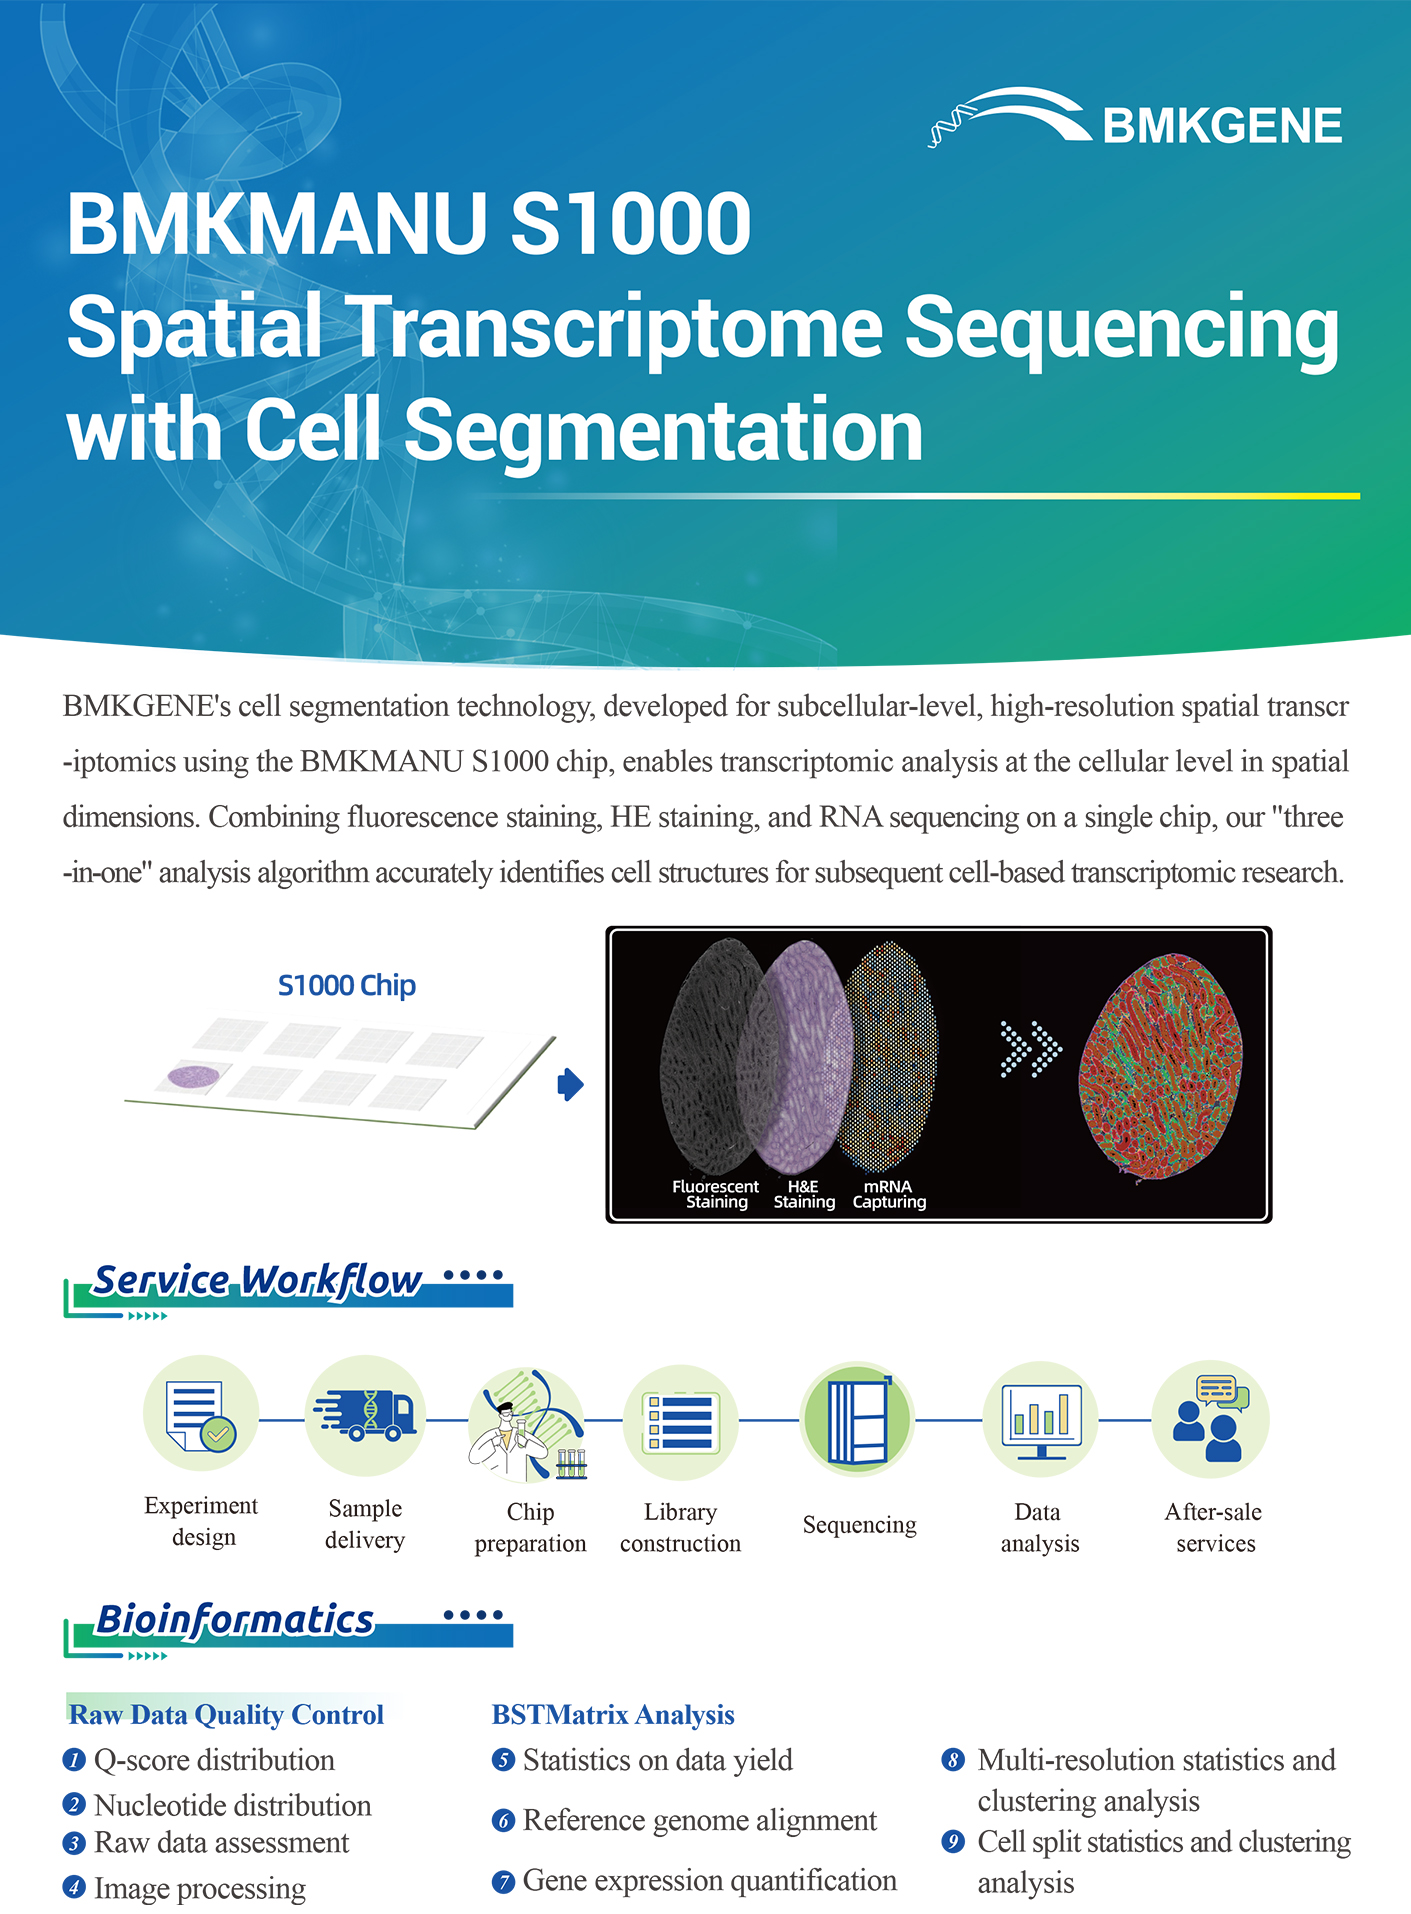 http://www.bmkgene.com/uploads/BMKMANU-S1000-Spatial-Transcriptome-Sequencing-with-Cell-Segmentation-BMKGENE-2311.pdf